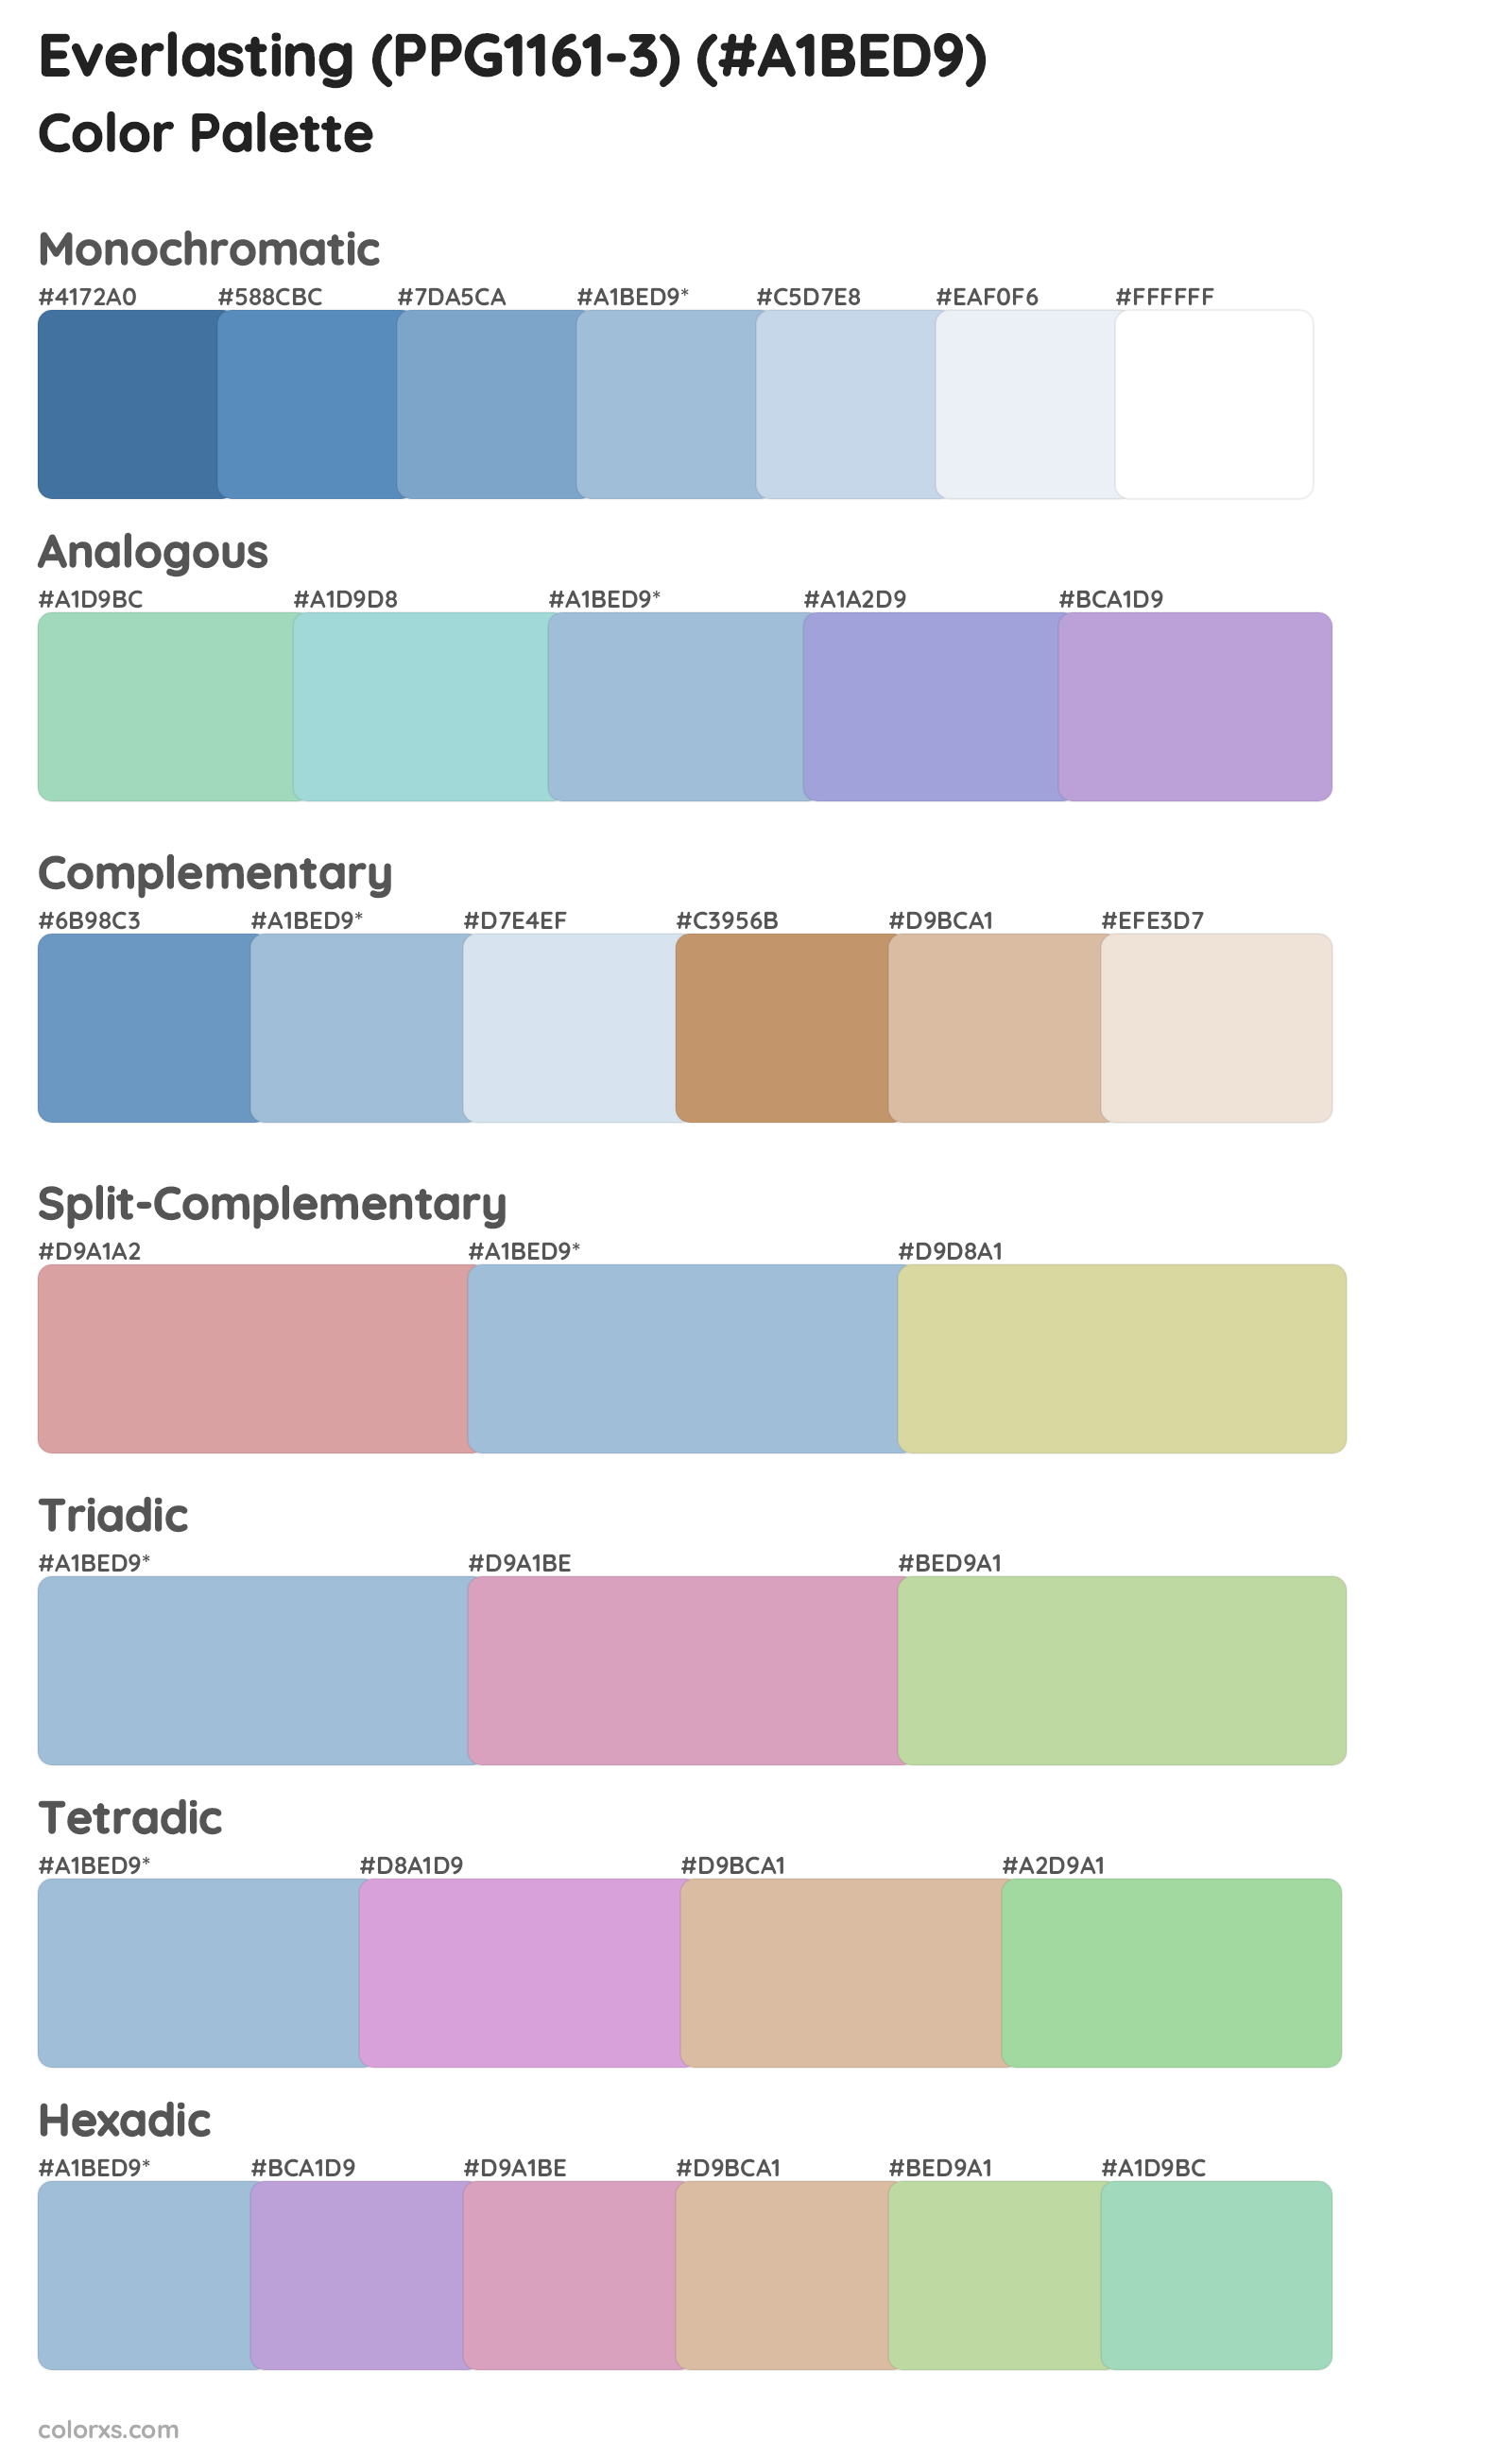 Everlasting (PPG1161-3) Color Scheme Palettes